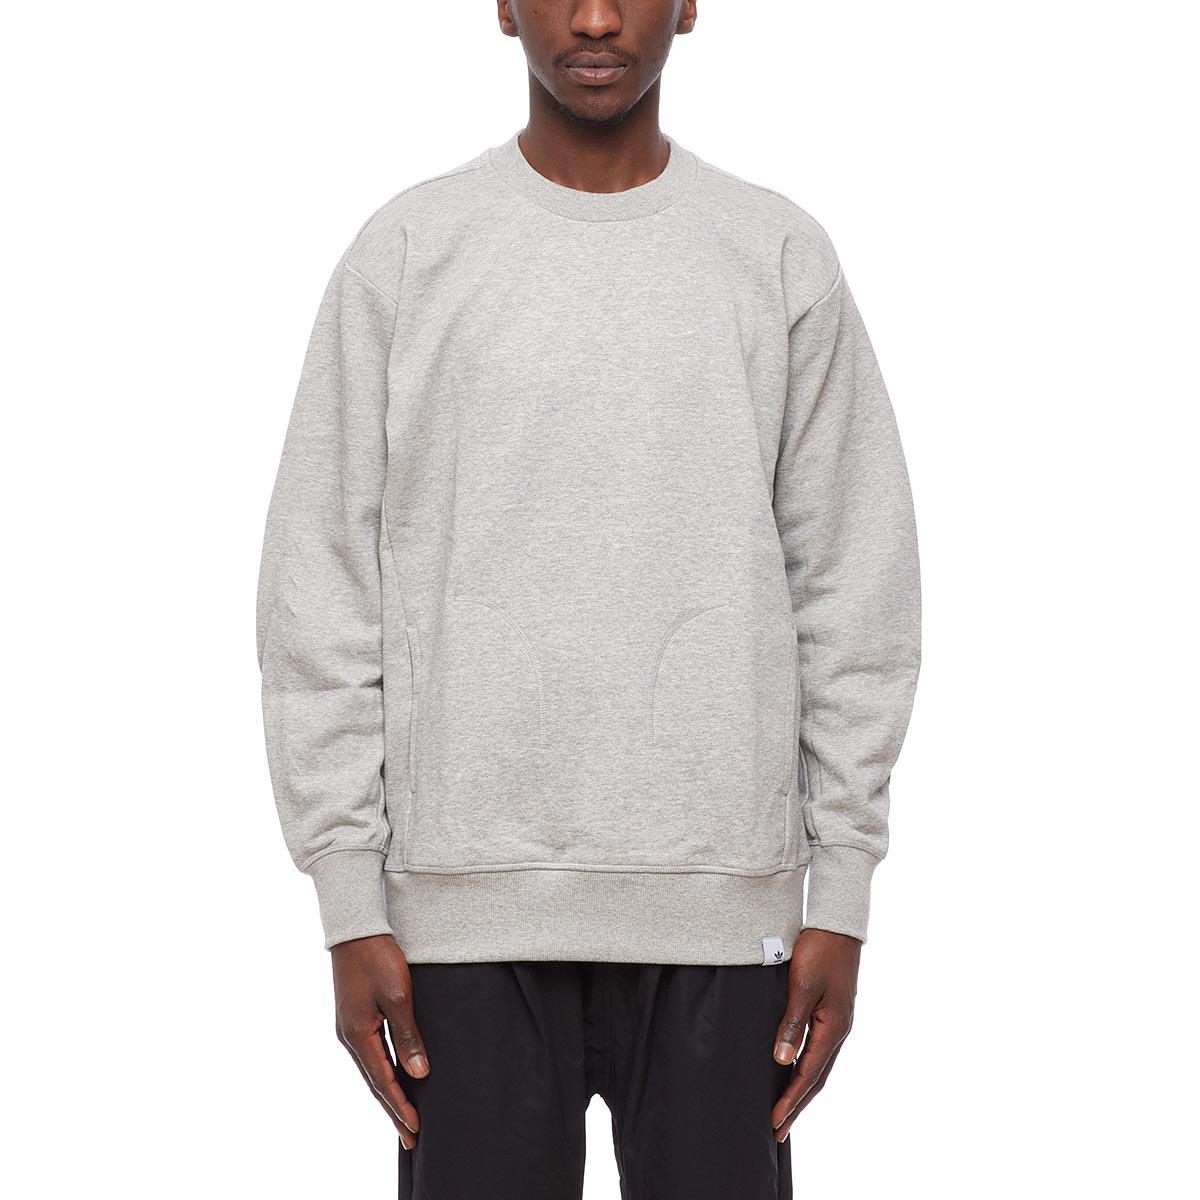 Lyst - adidas Originals Xbyo Sweatshirt in Gray for Men